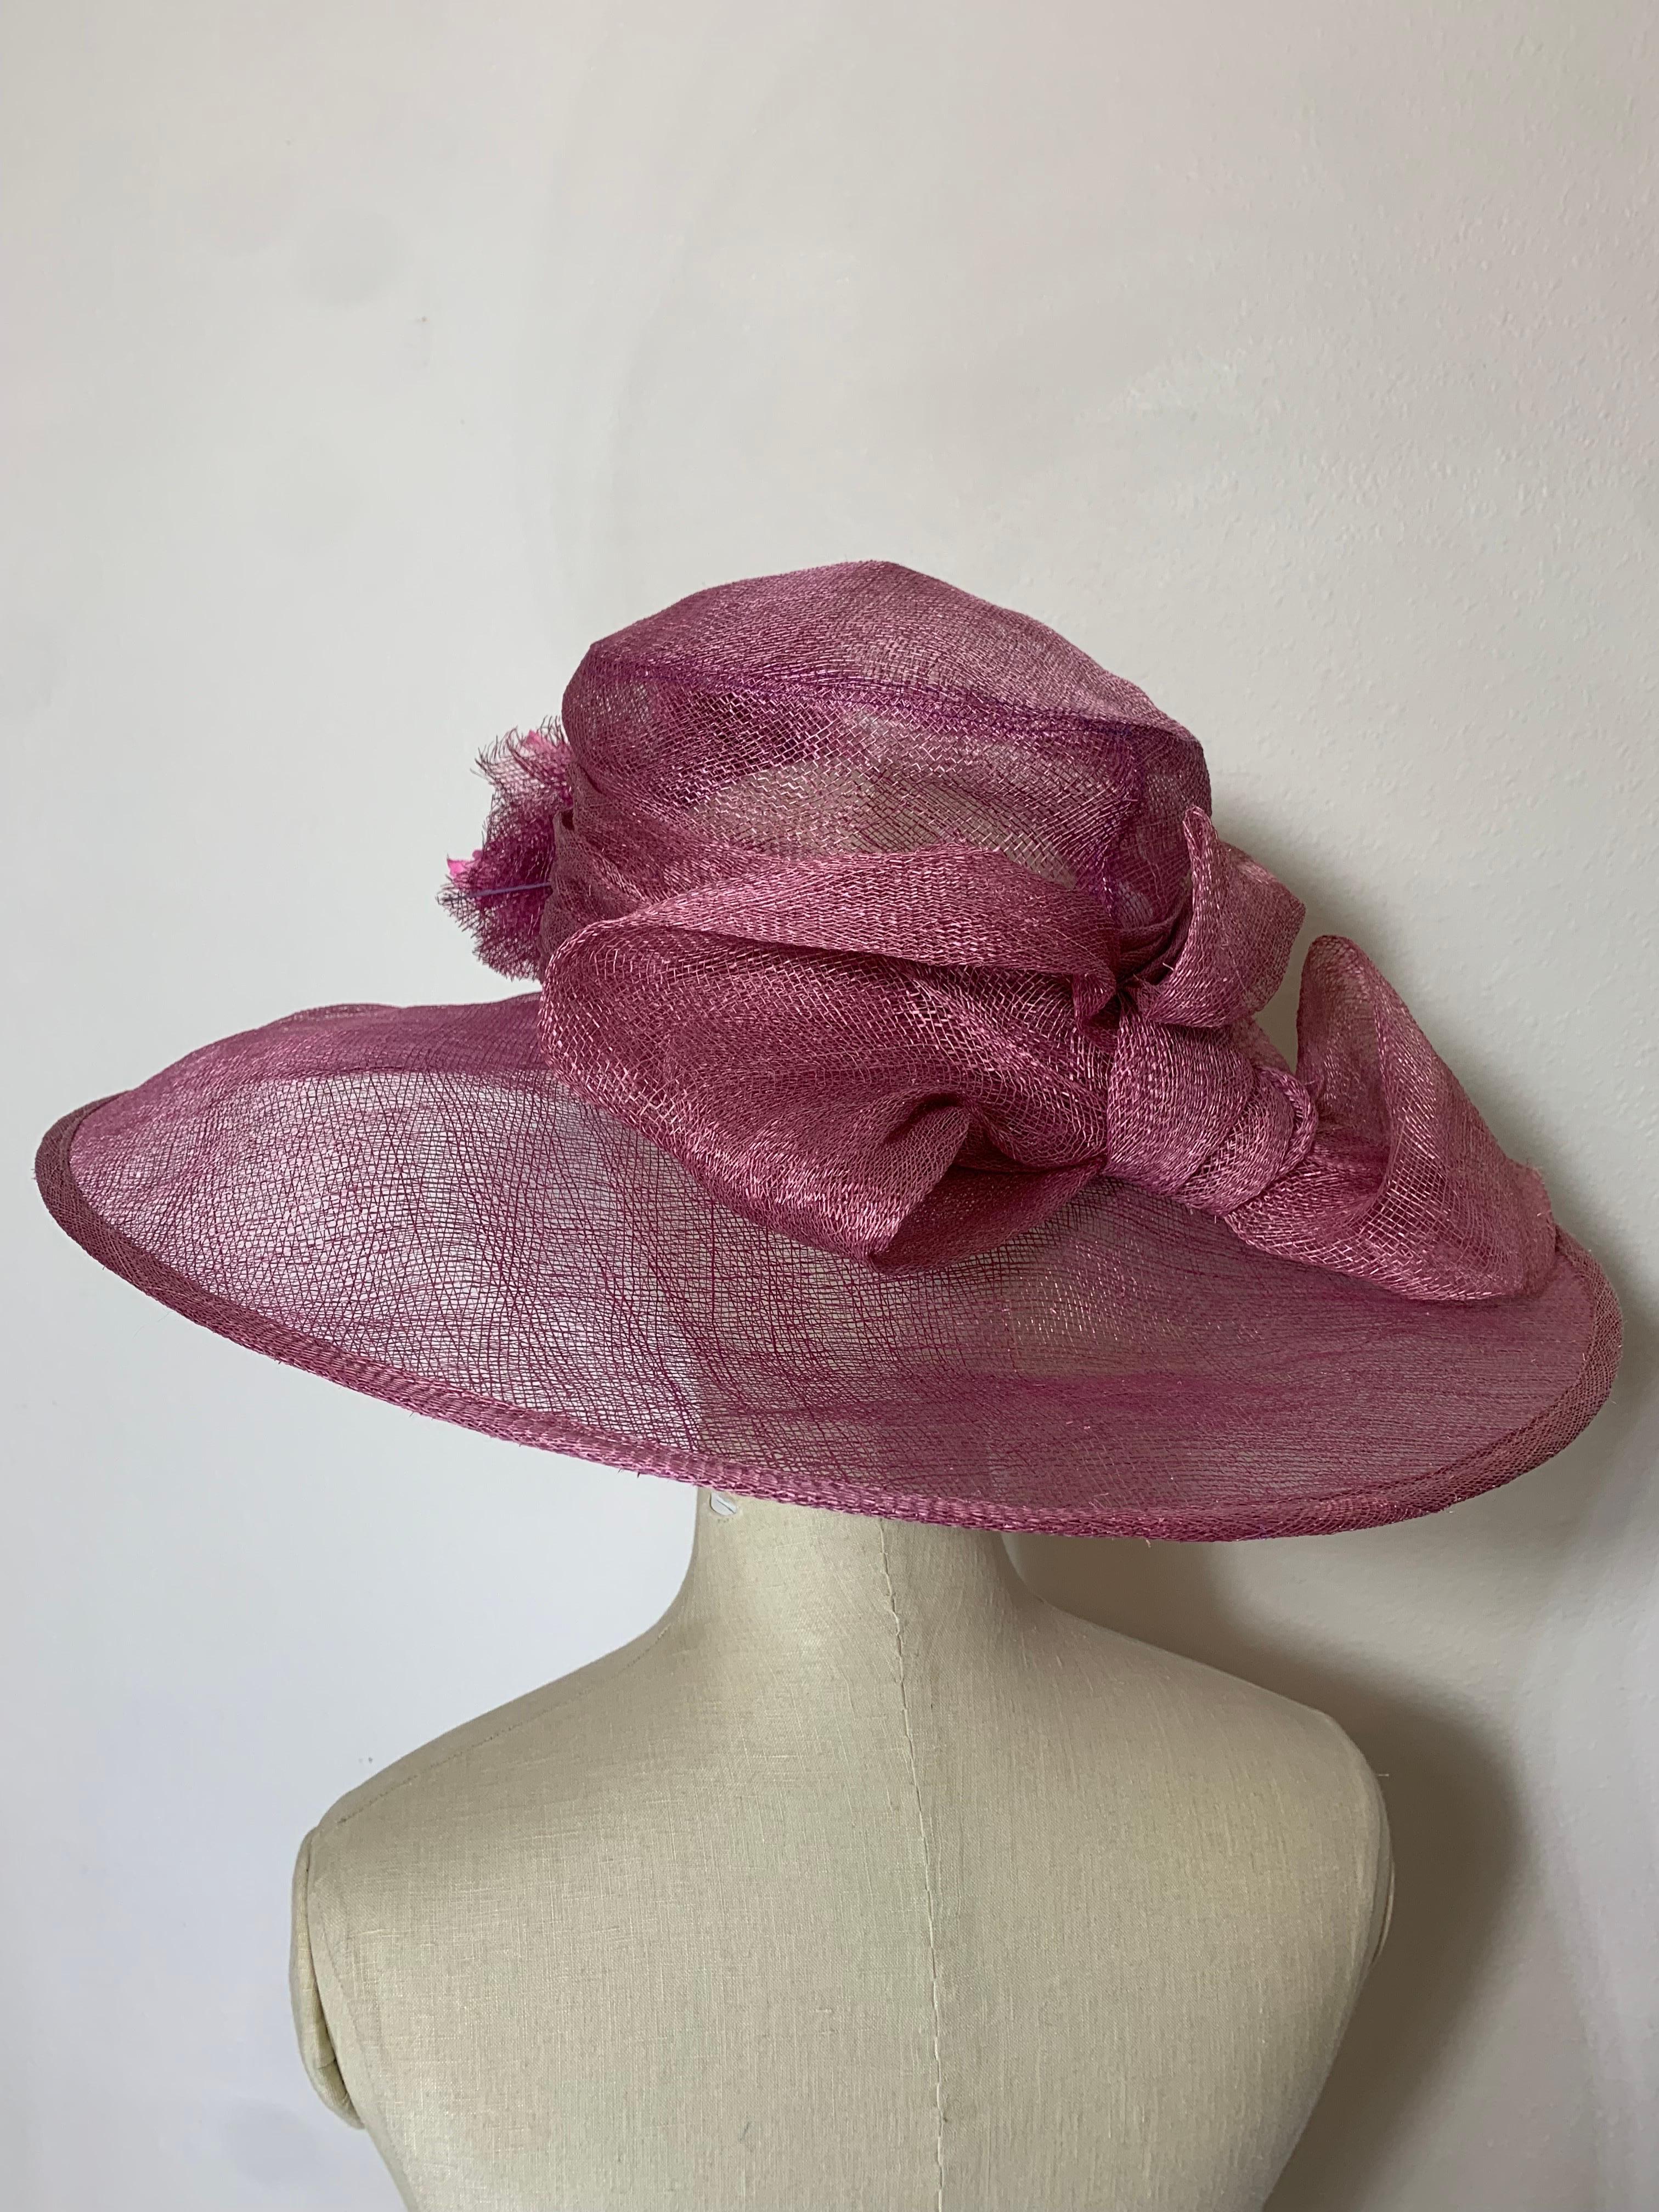 Maison Michel Spring/Summer Mauve Sheer Straw Cartwheel Wide Brim Hat w Flowers For Sale 1